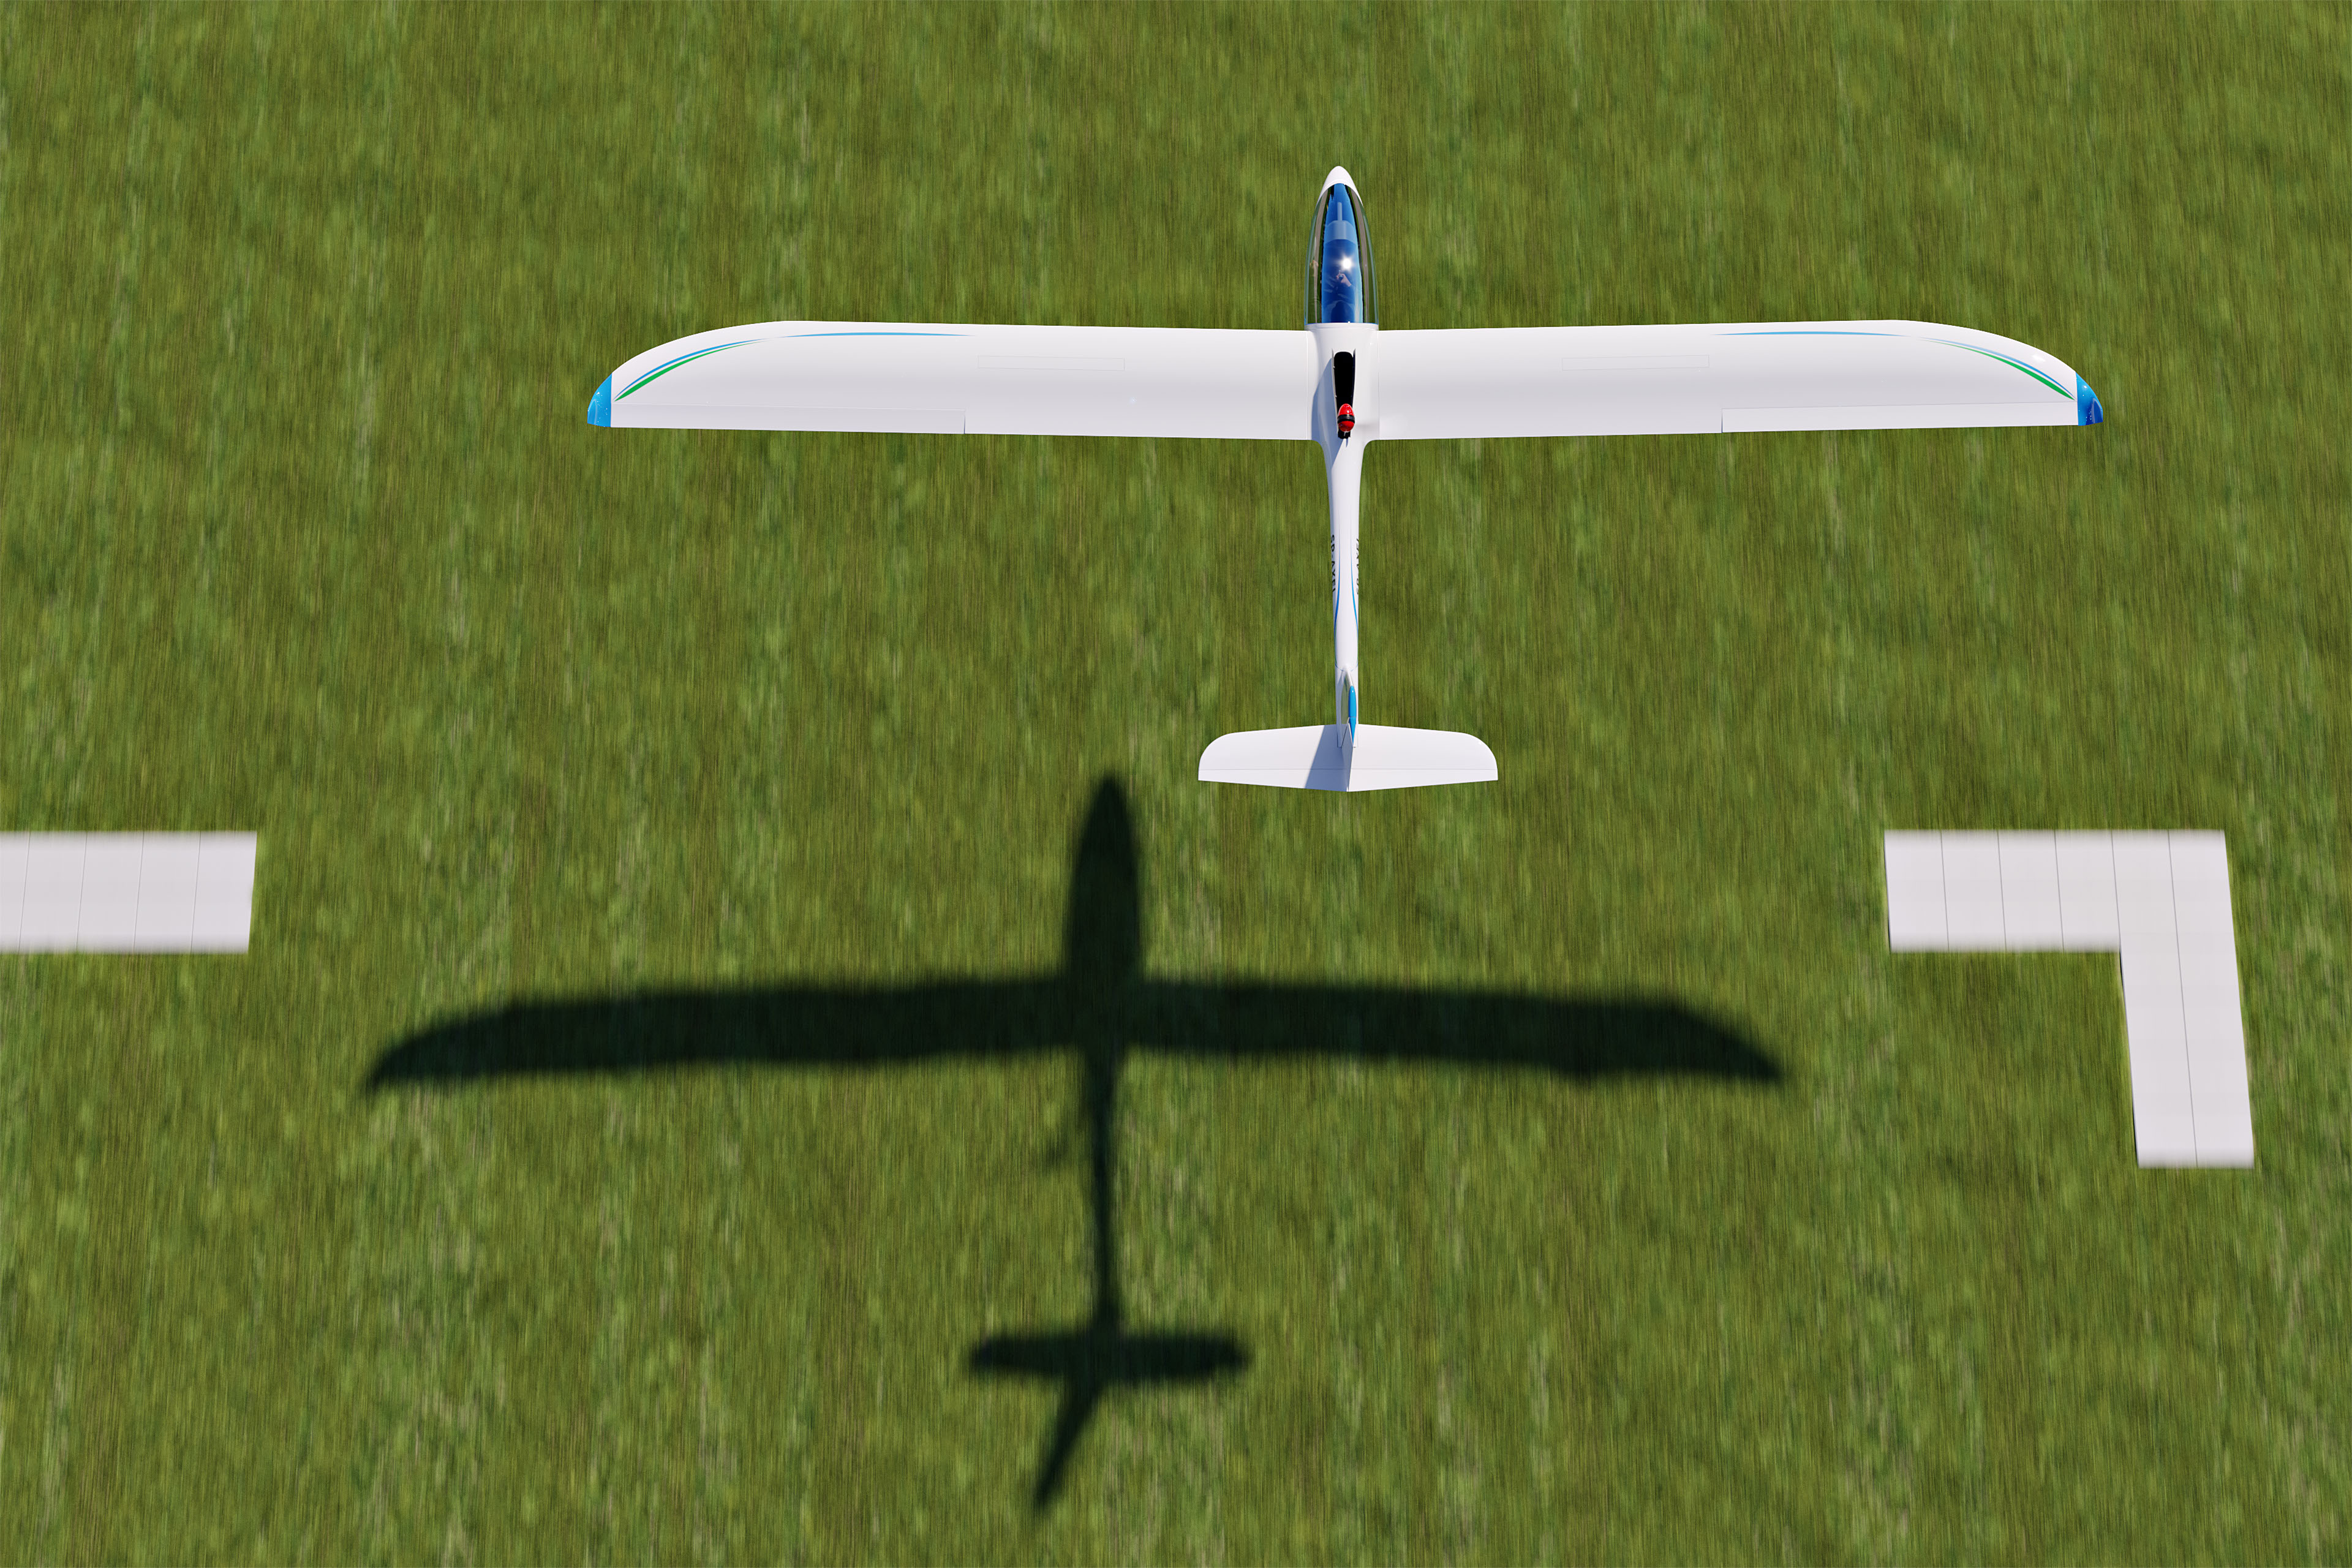 Axel Sailplane take off on grass runway.